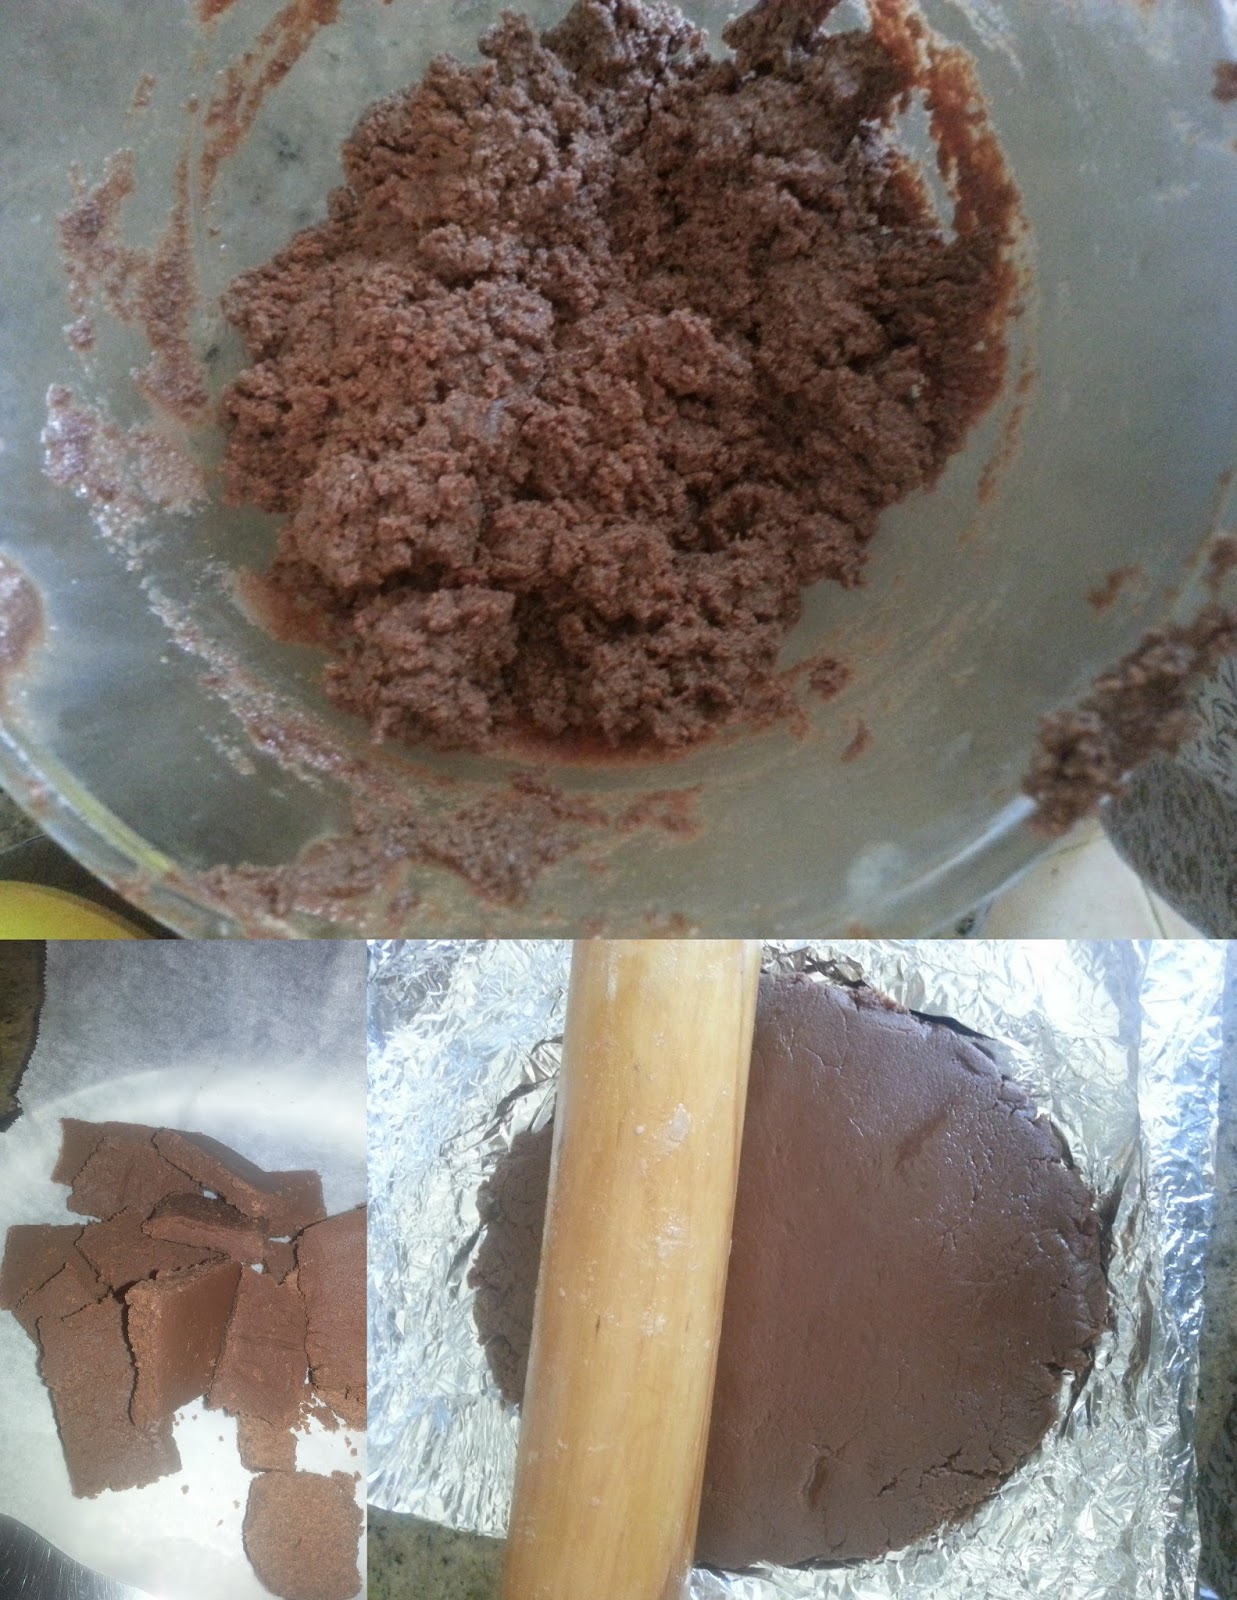 Shape the chocolate fudge